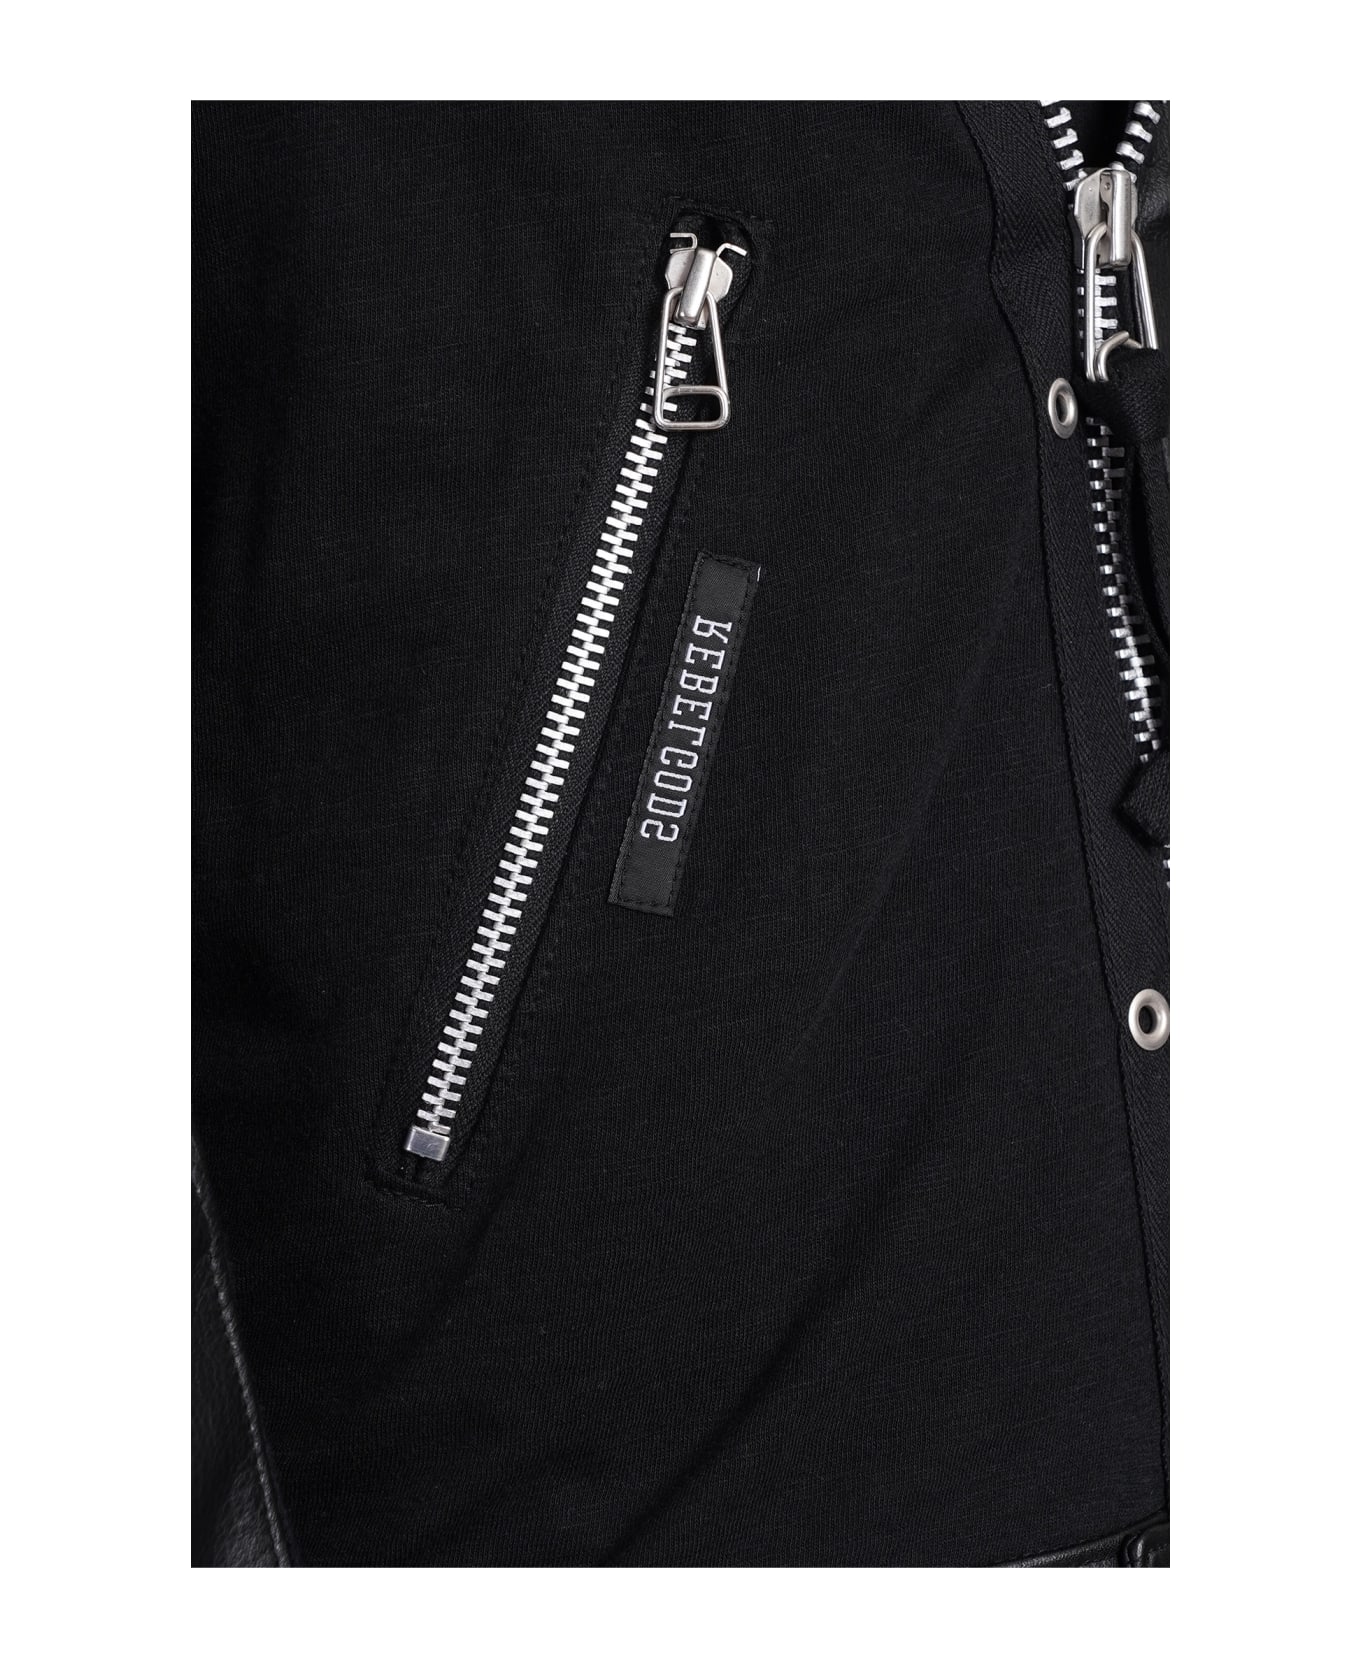 Undercover Jun Takahashi Biker Jacket In Black Leather - black レザージャケット